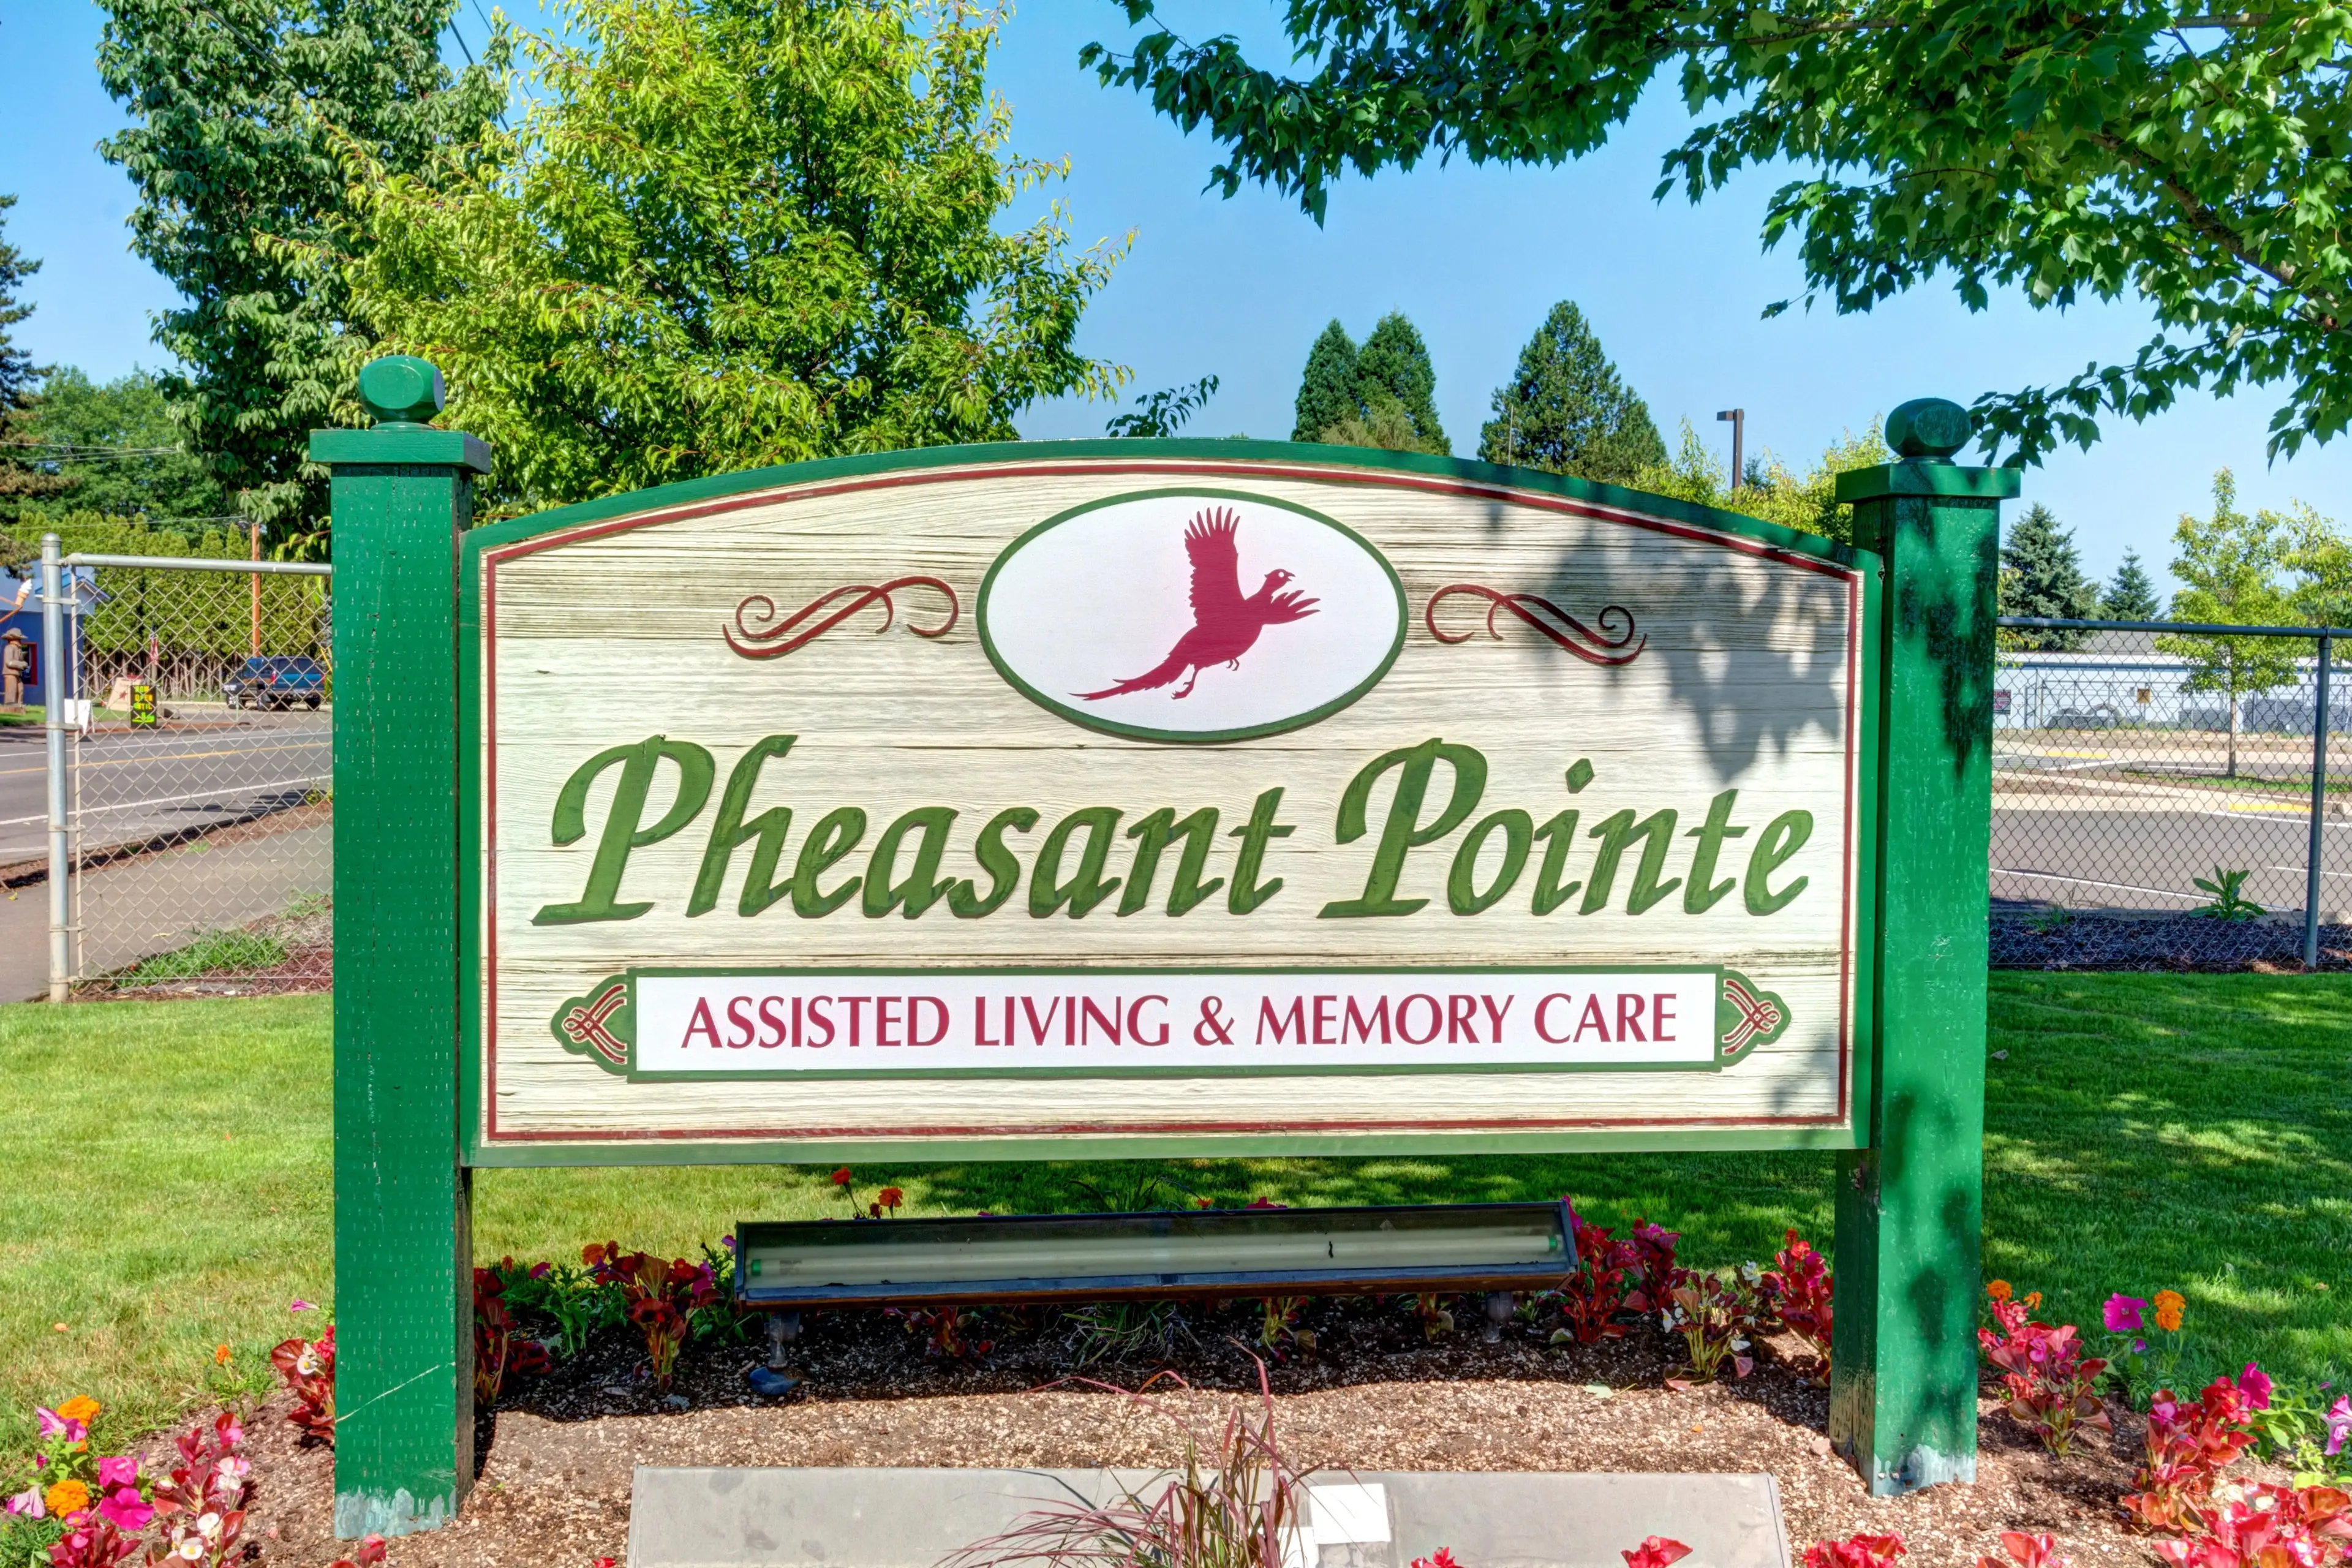 Pheasant Pointe